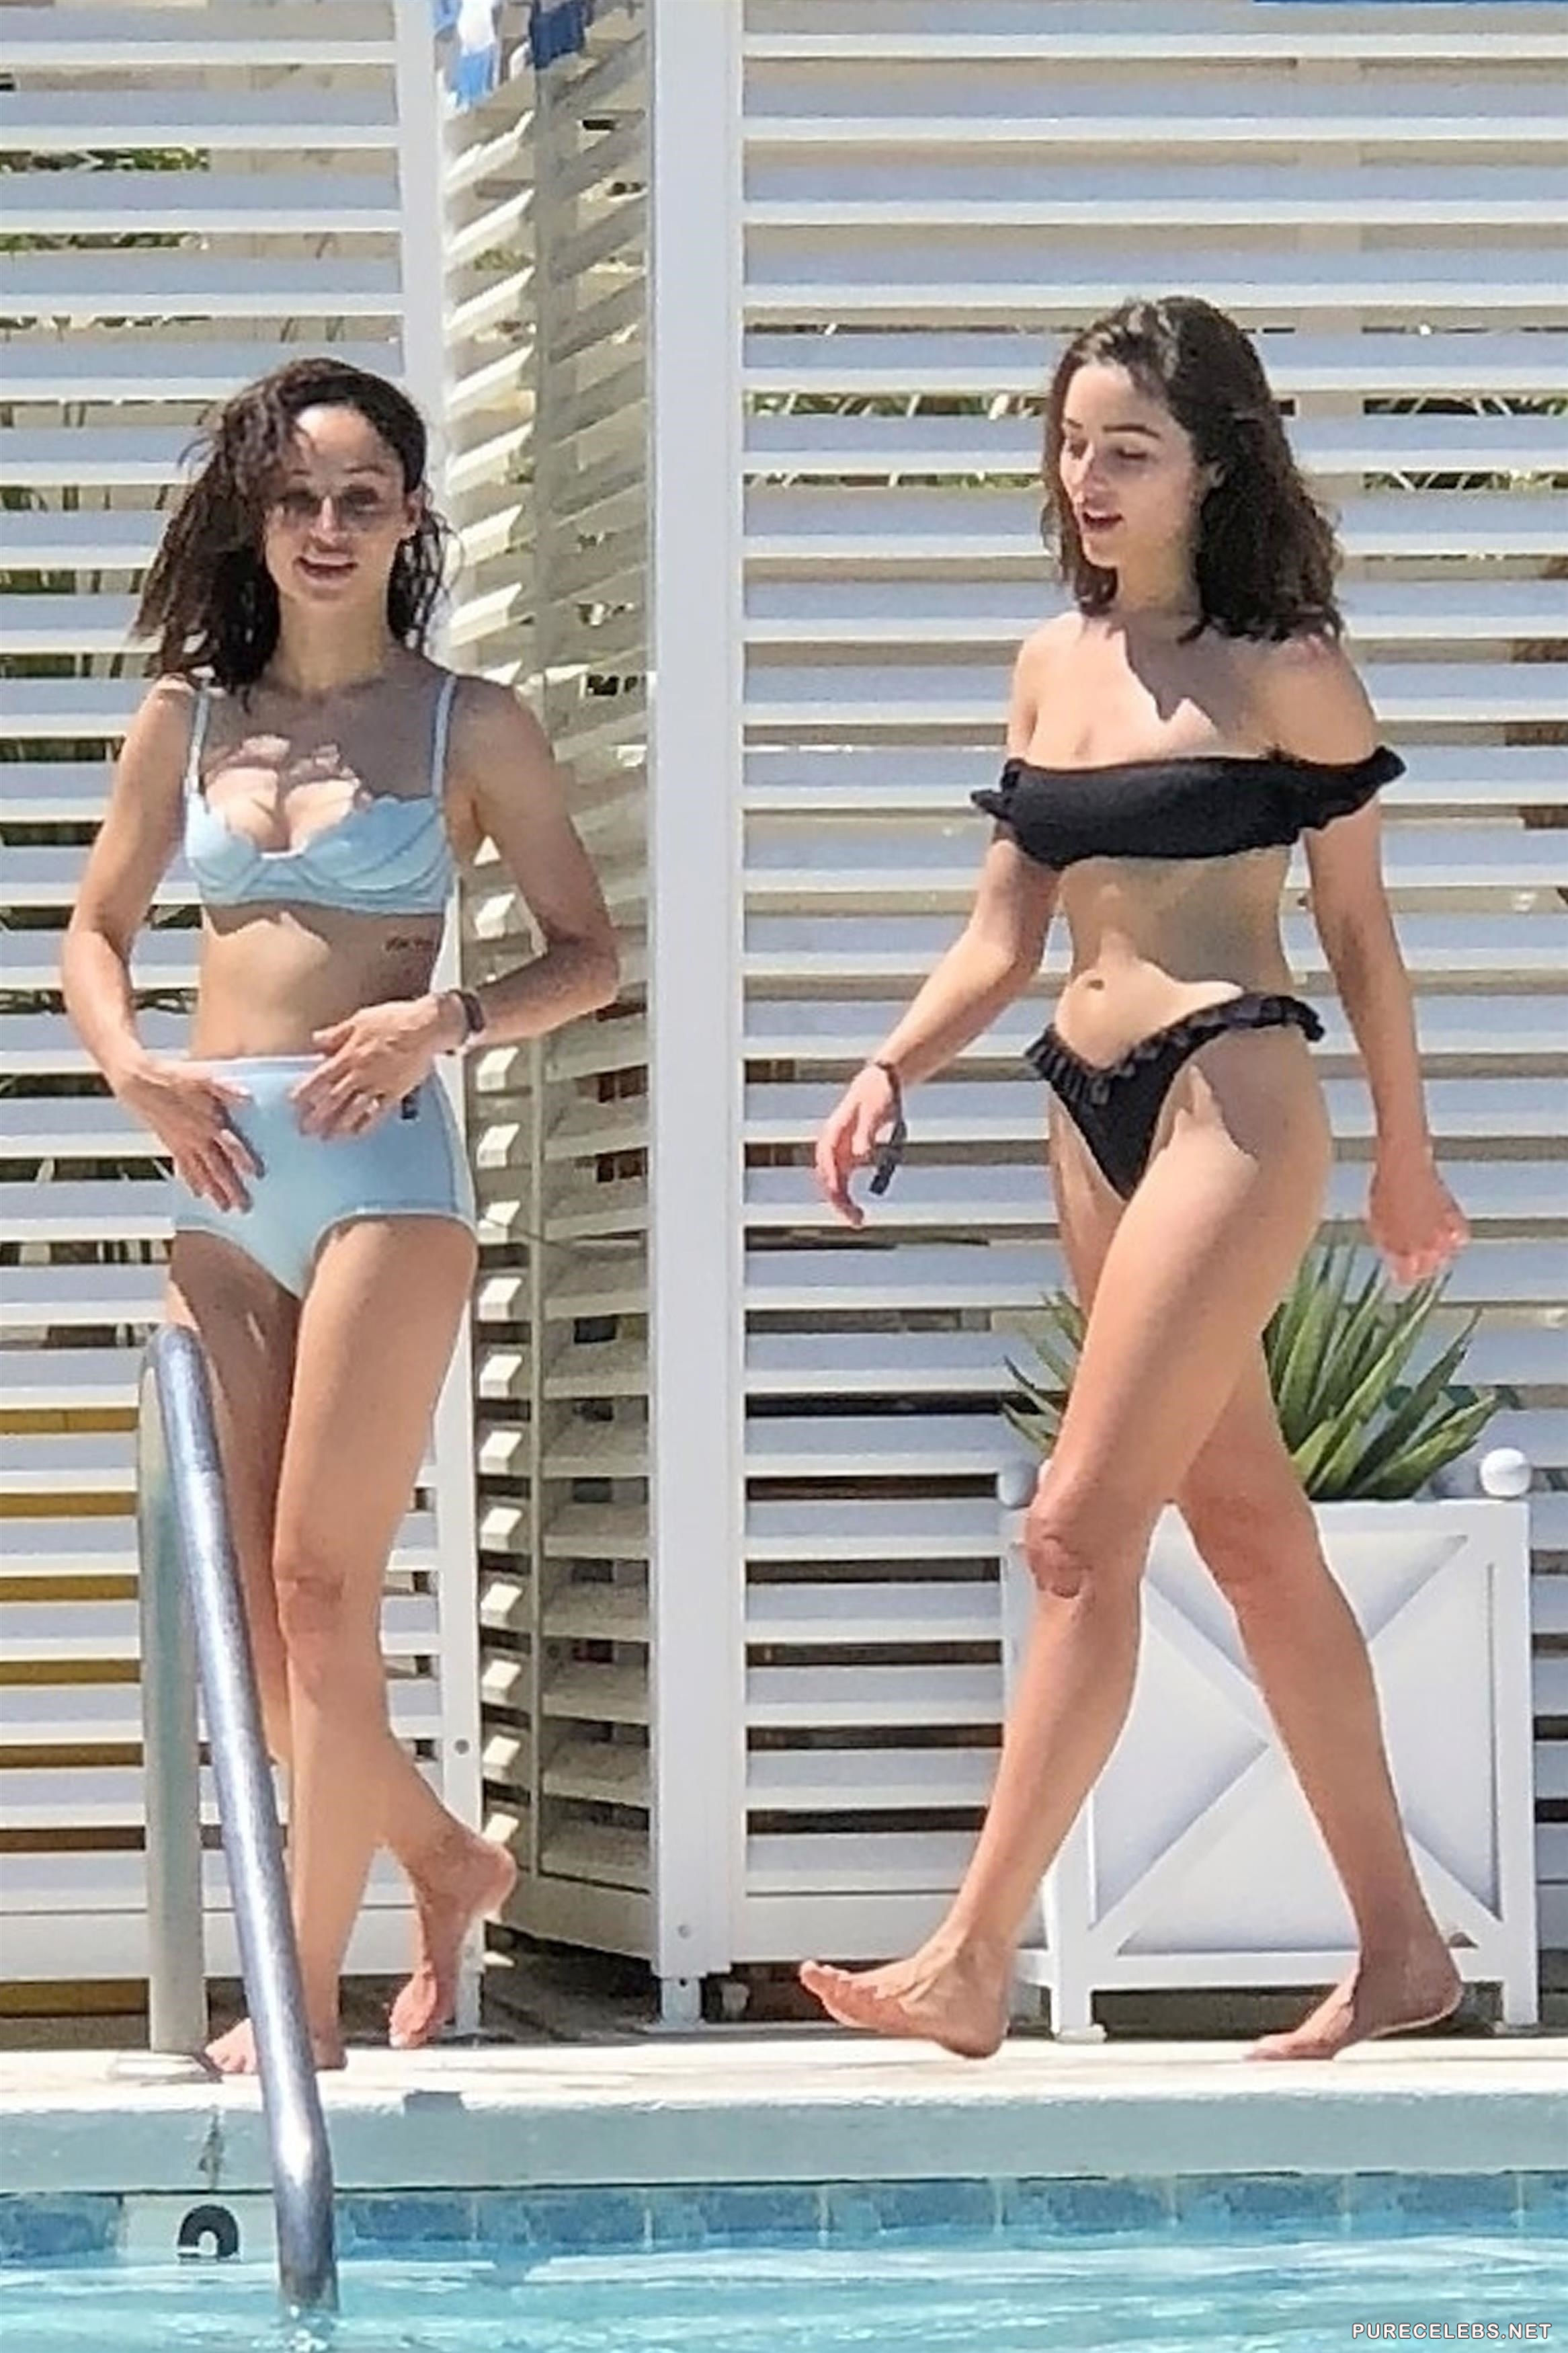 Olivia Culpo And Cara Santana Caught In Thong Bikini